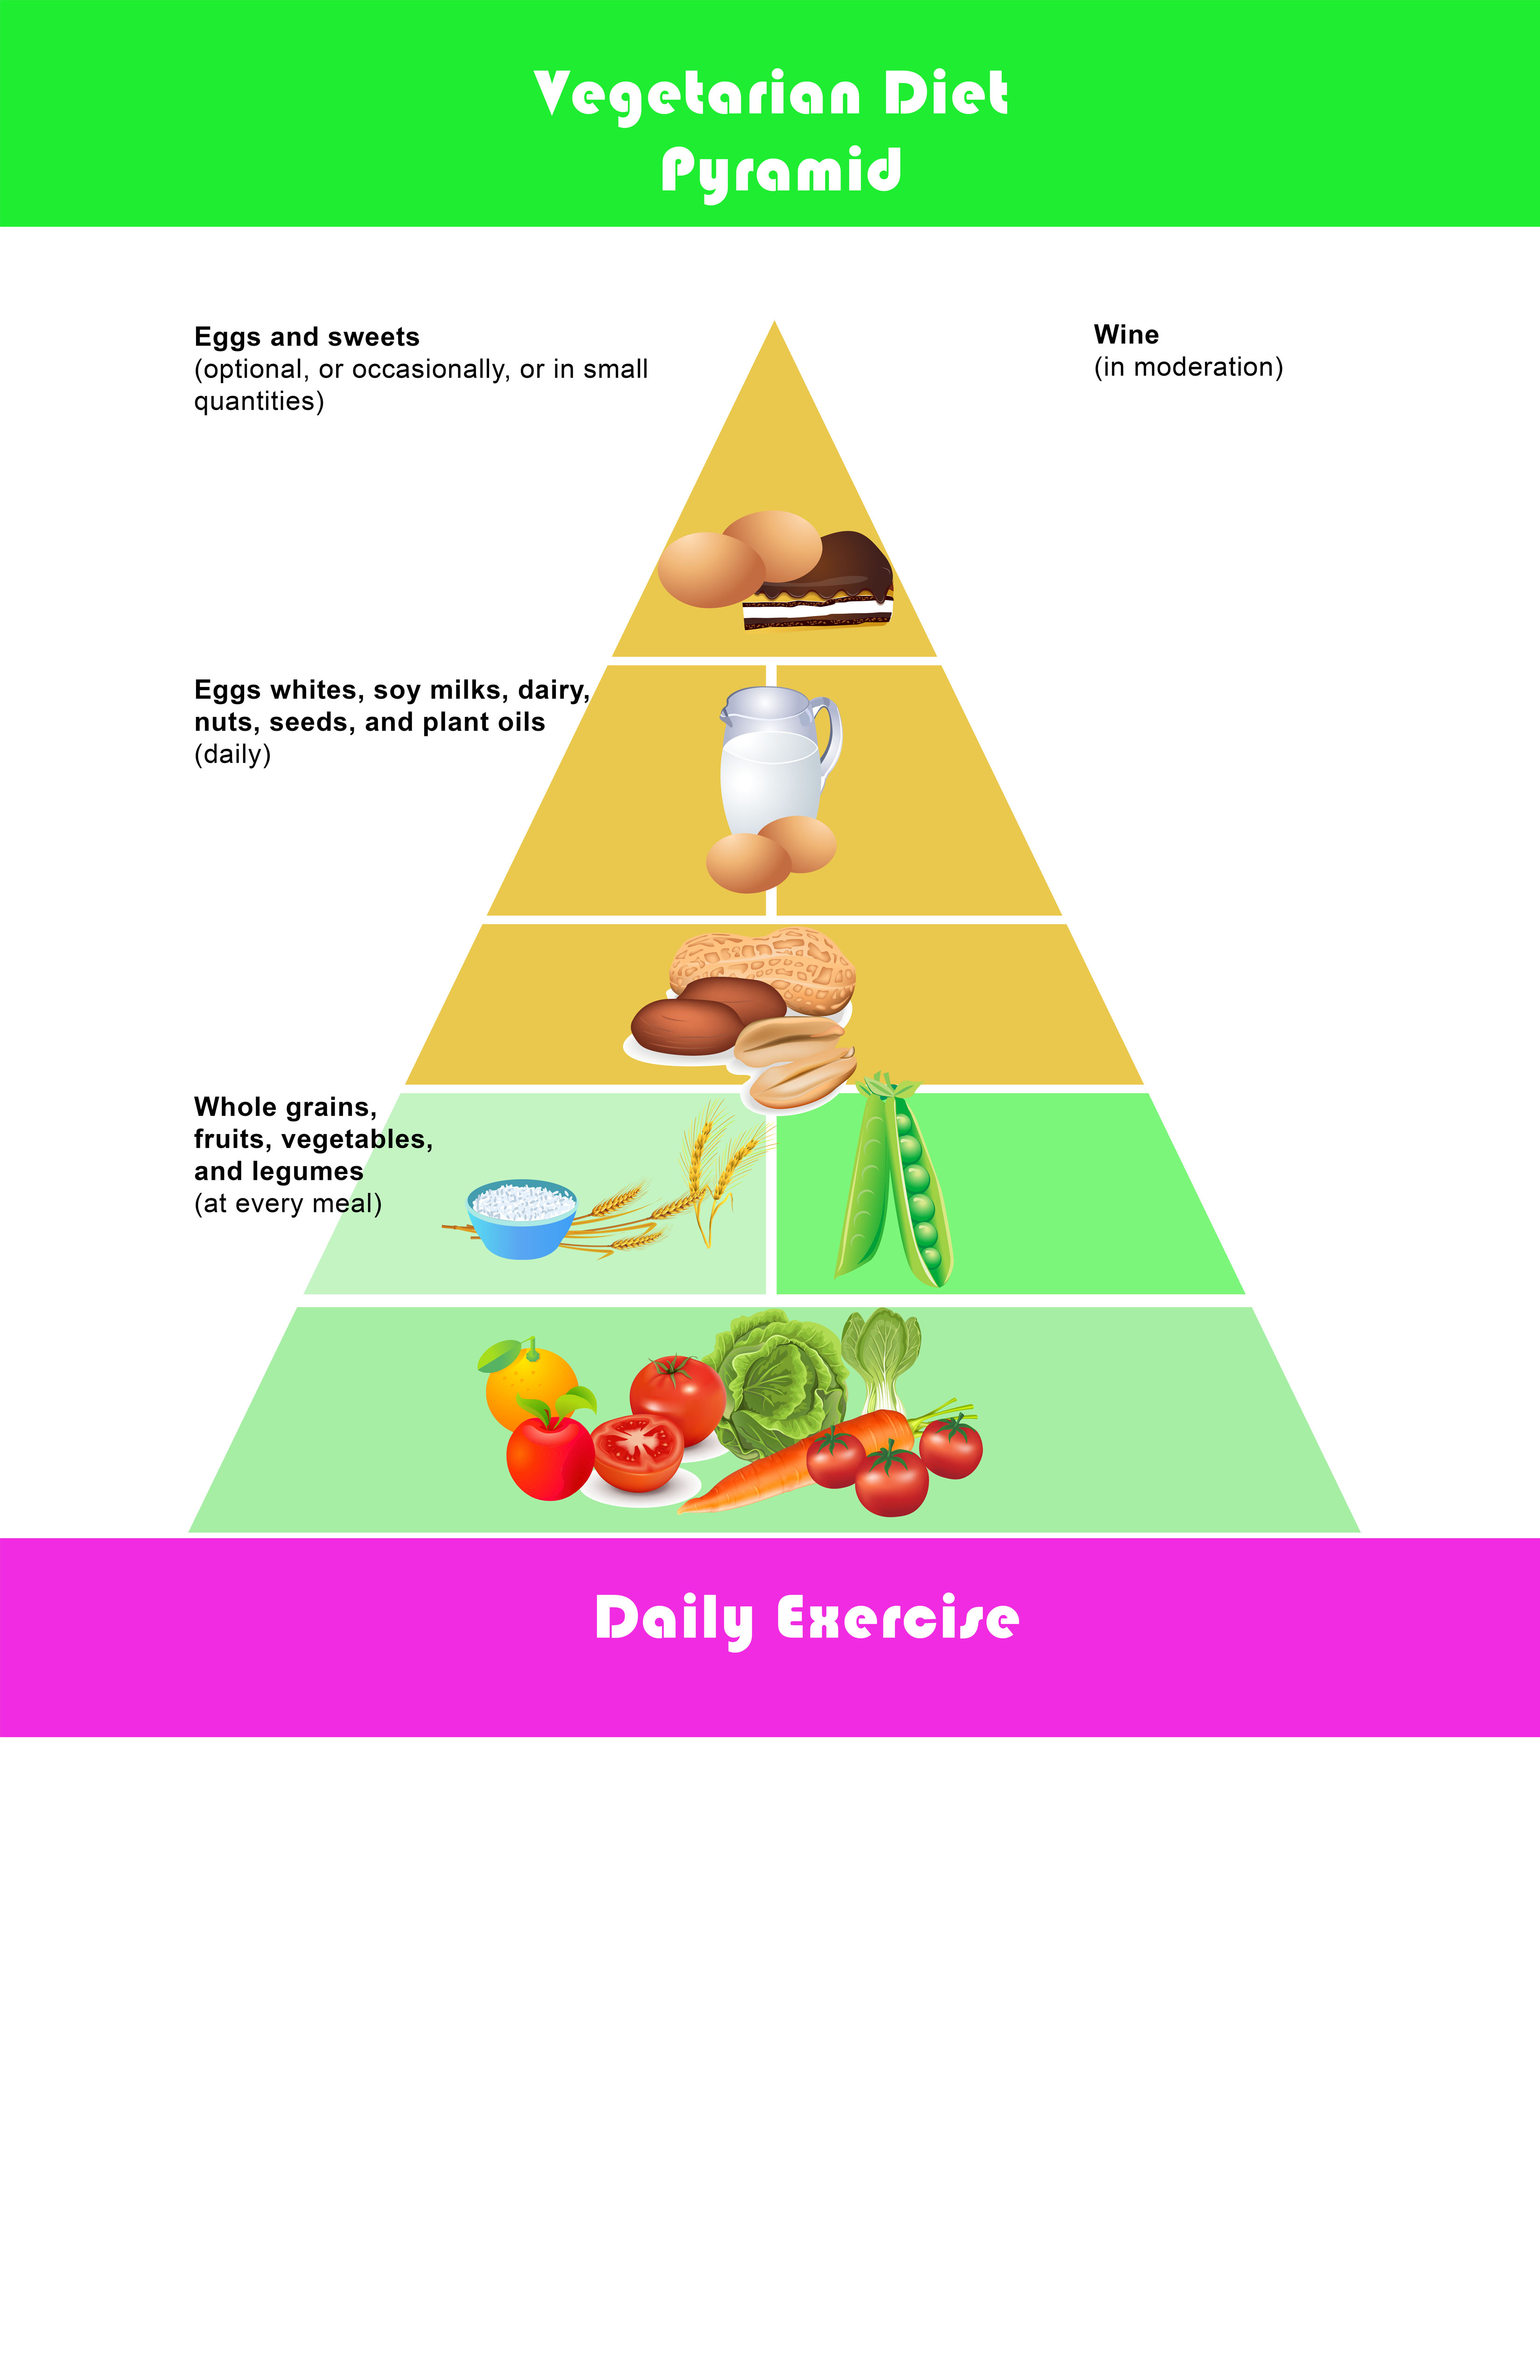 Food Guide Pyramid